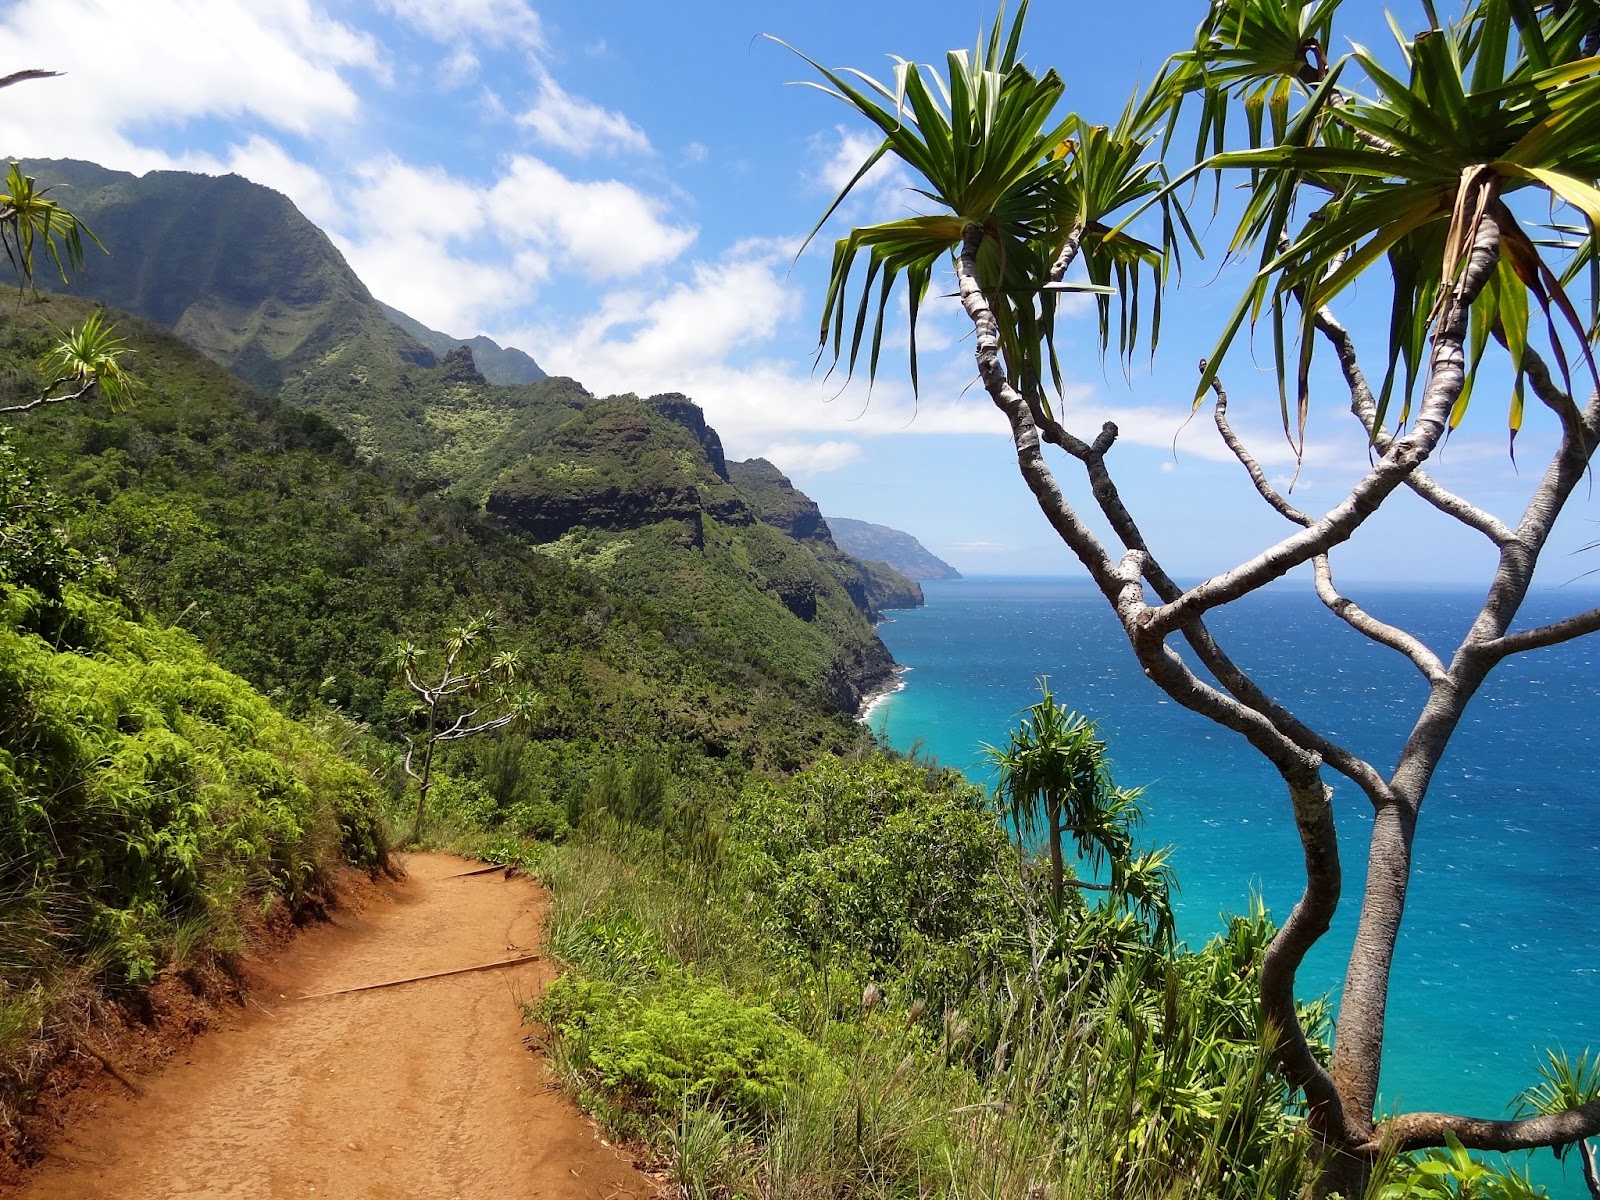 Adventurous horseback riding trail through Hawaii's scenic landscapes.